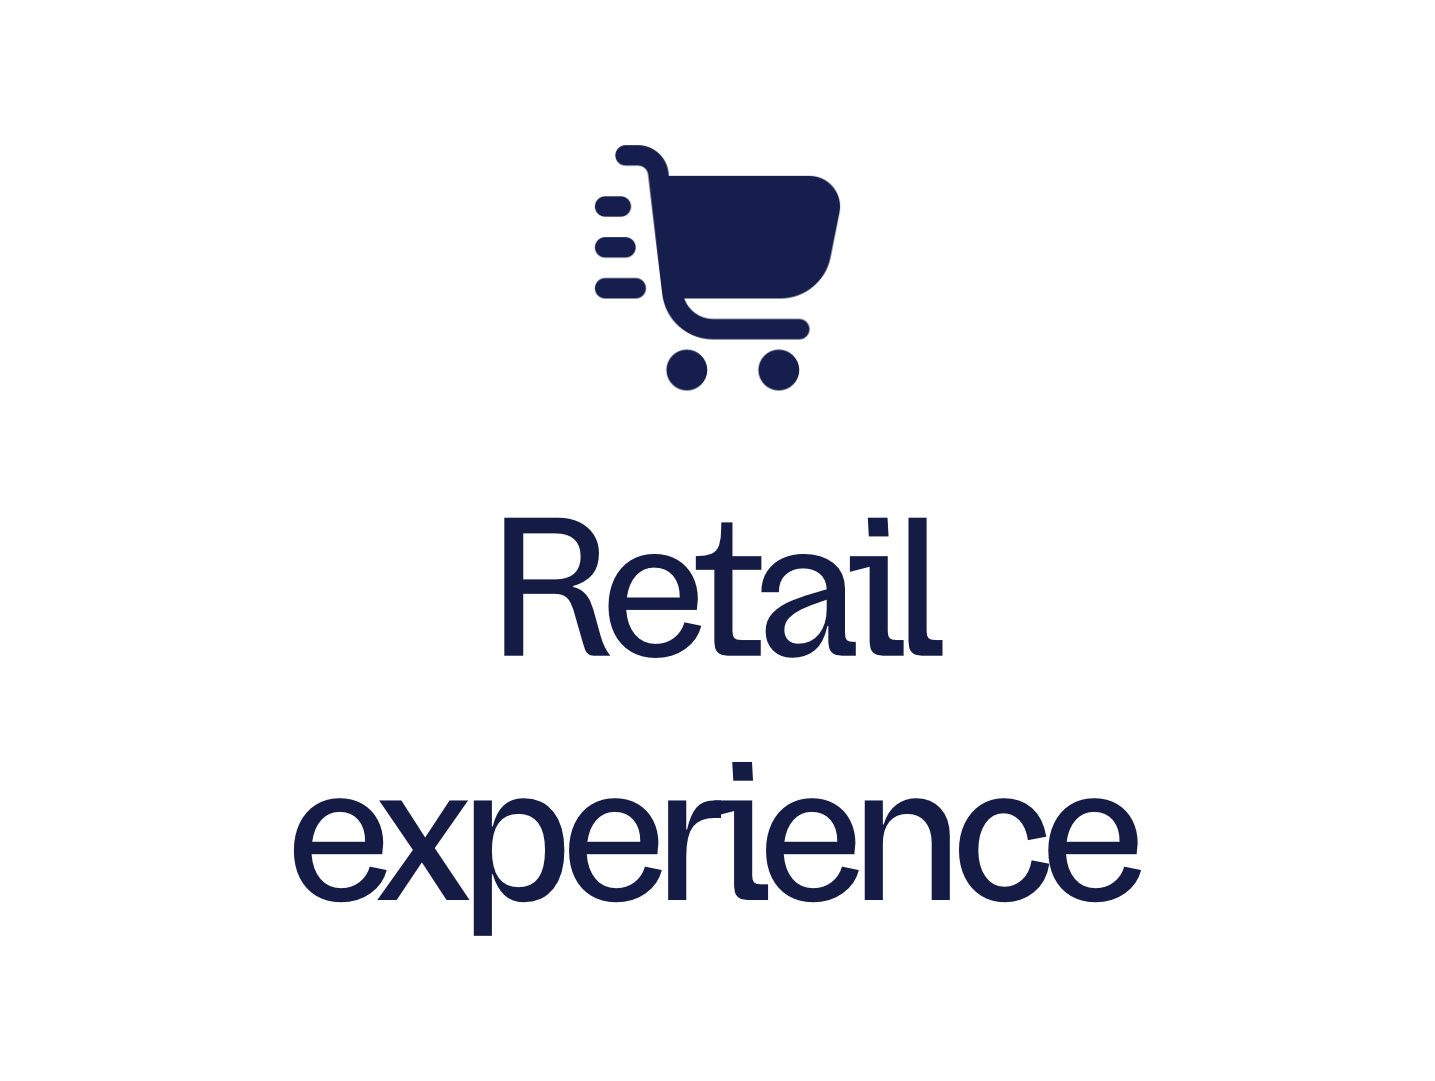 Retail experience